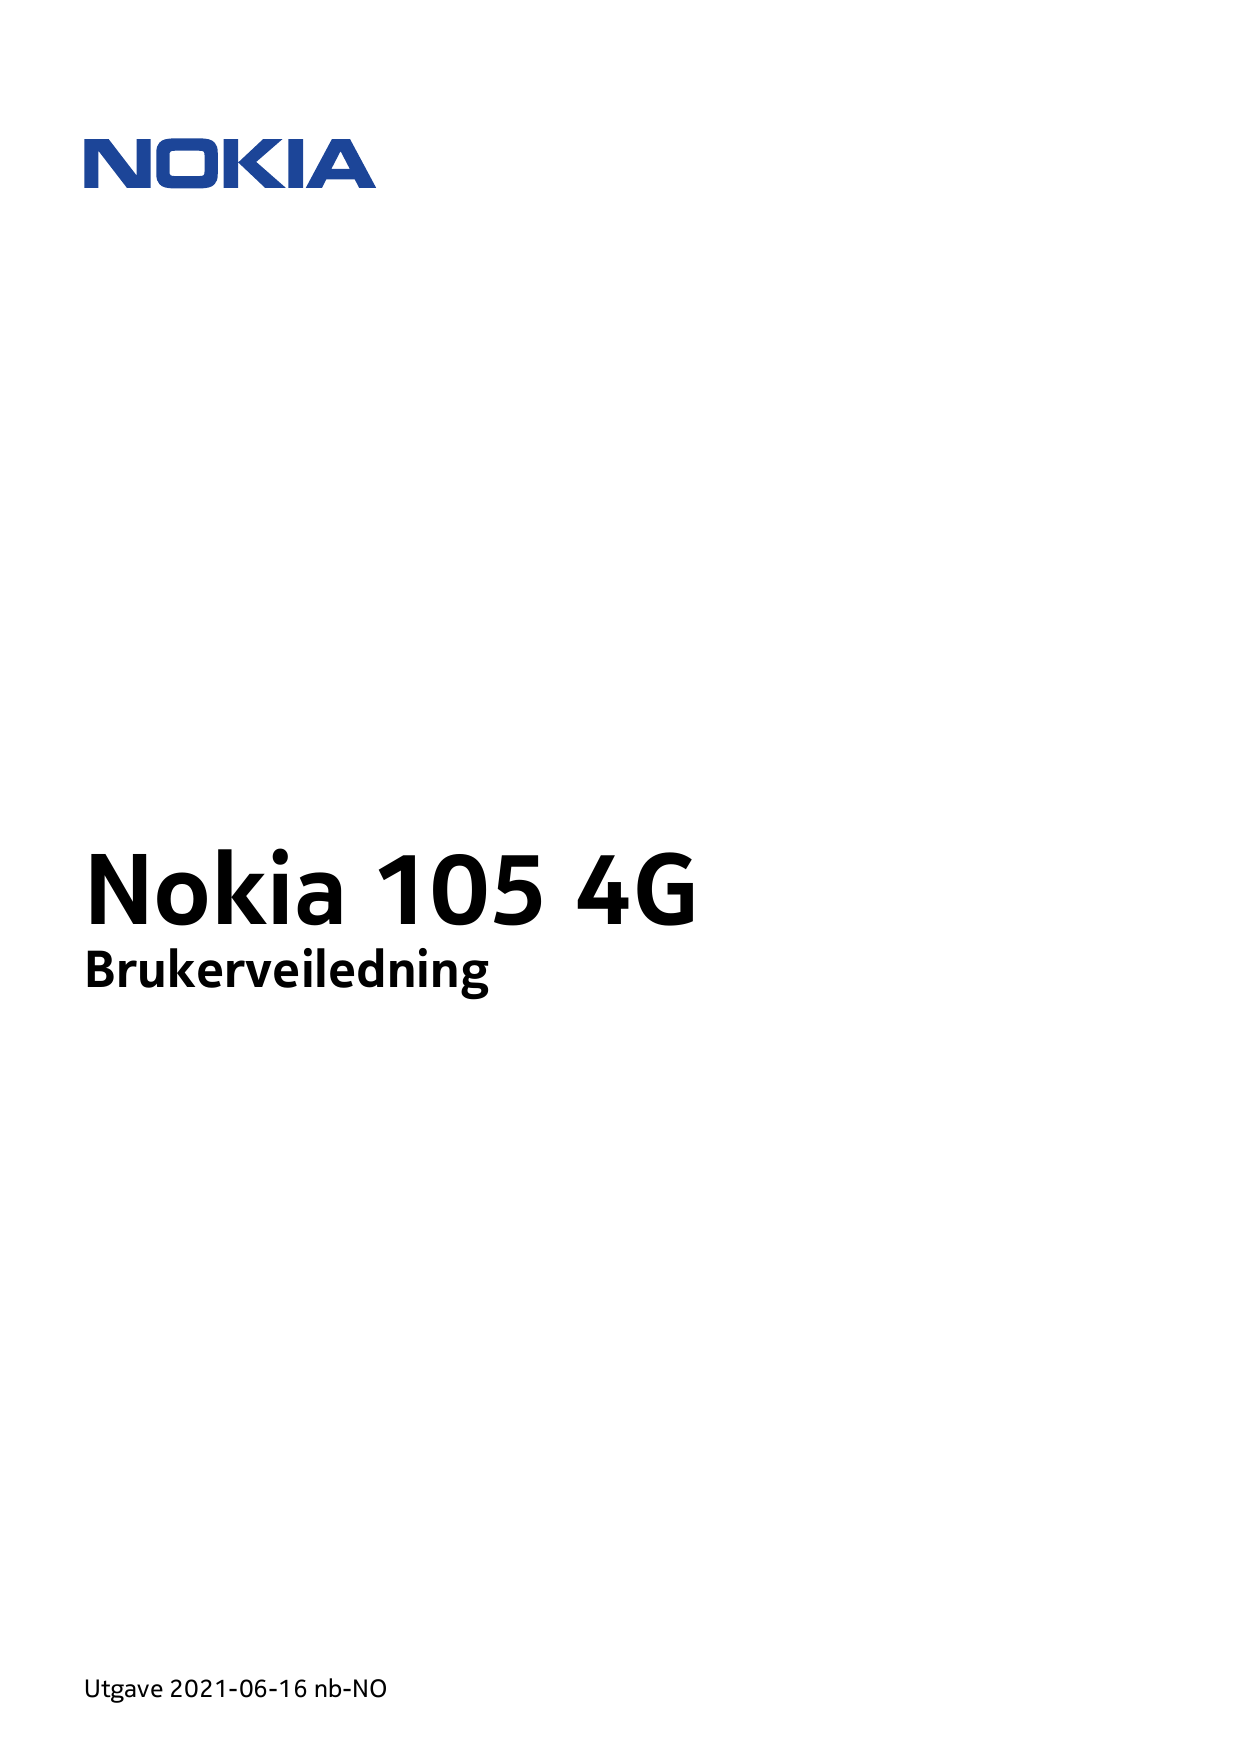 Nokia 105 4GBrukerveiledningUtgave 2021-06-16 nb-NO